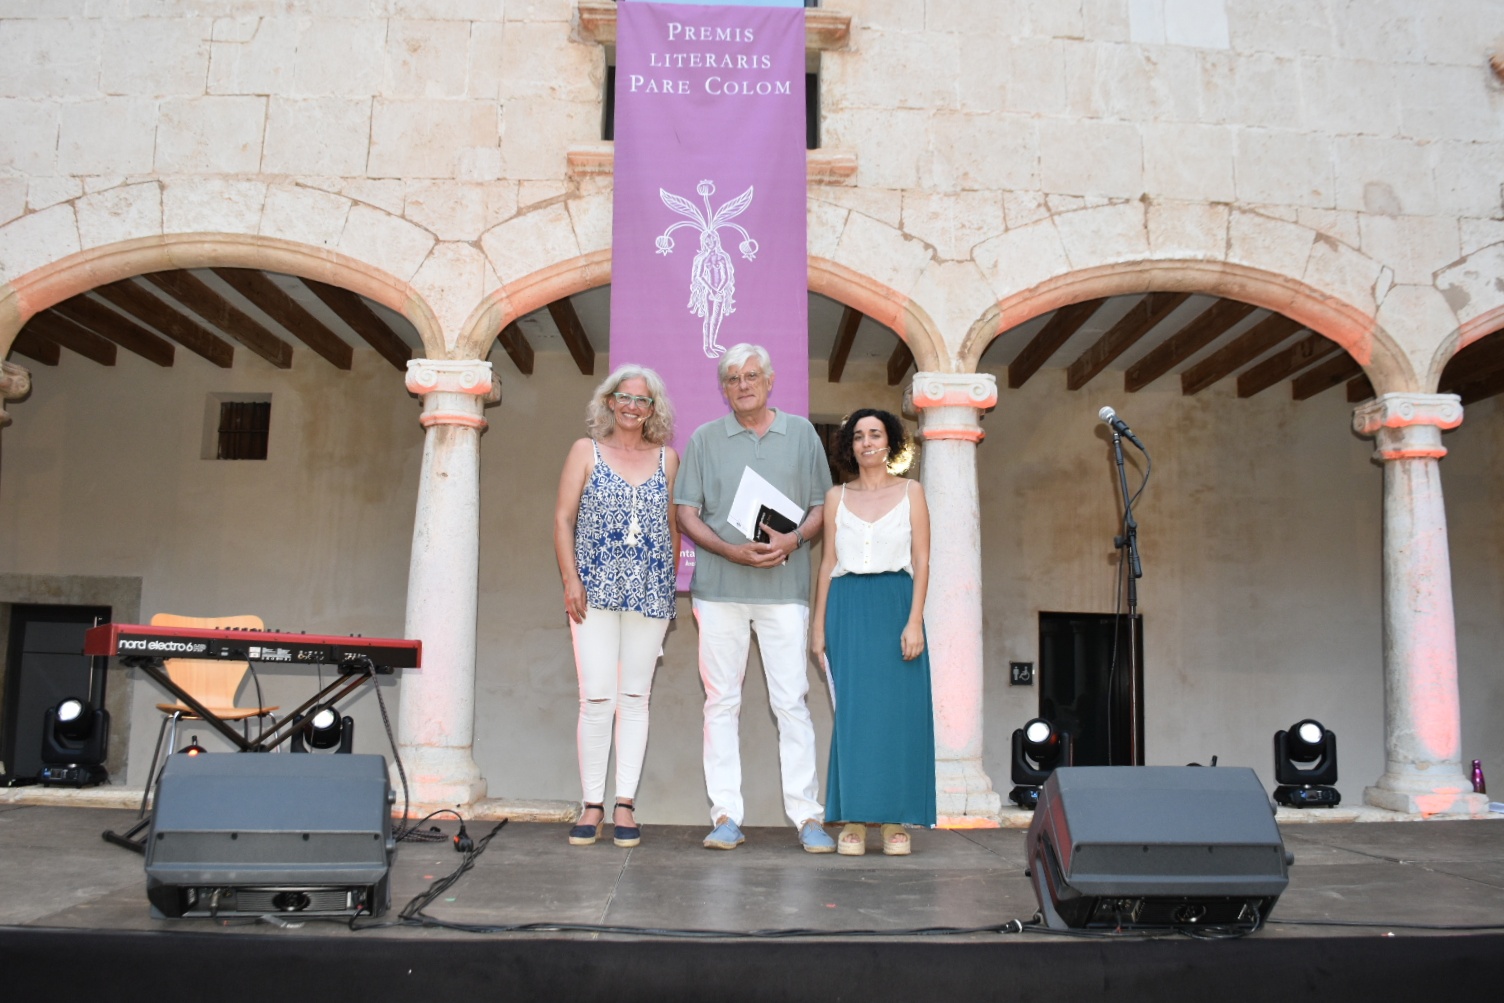 Antoni Carrasco, Esther Lázaro i Josep Maria Sala-Valldaura se'n duen els premis Pare Colom d'Inca